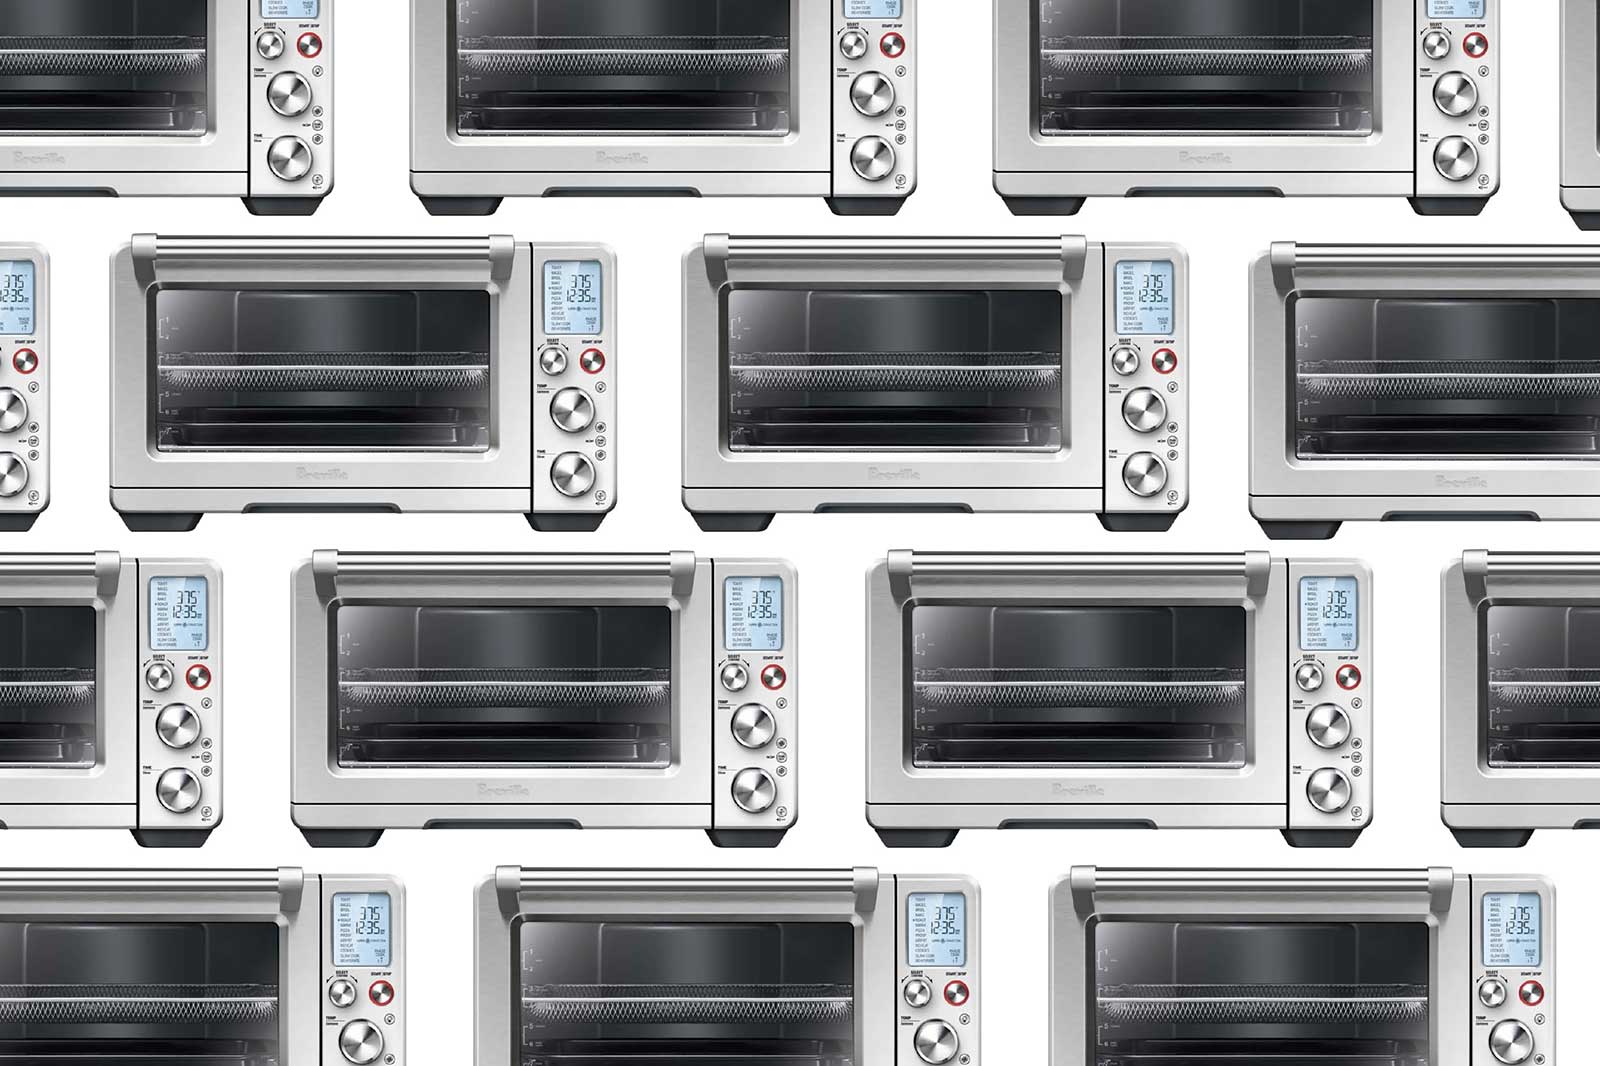 https://www.popsci.com/uploads/2023/11/15/early-black-friday-smart-oven-deal.jpg?auto=webp